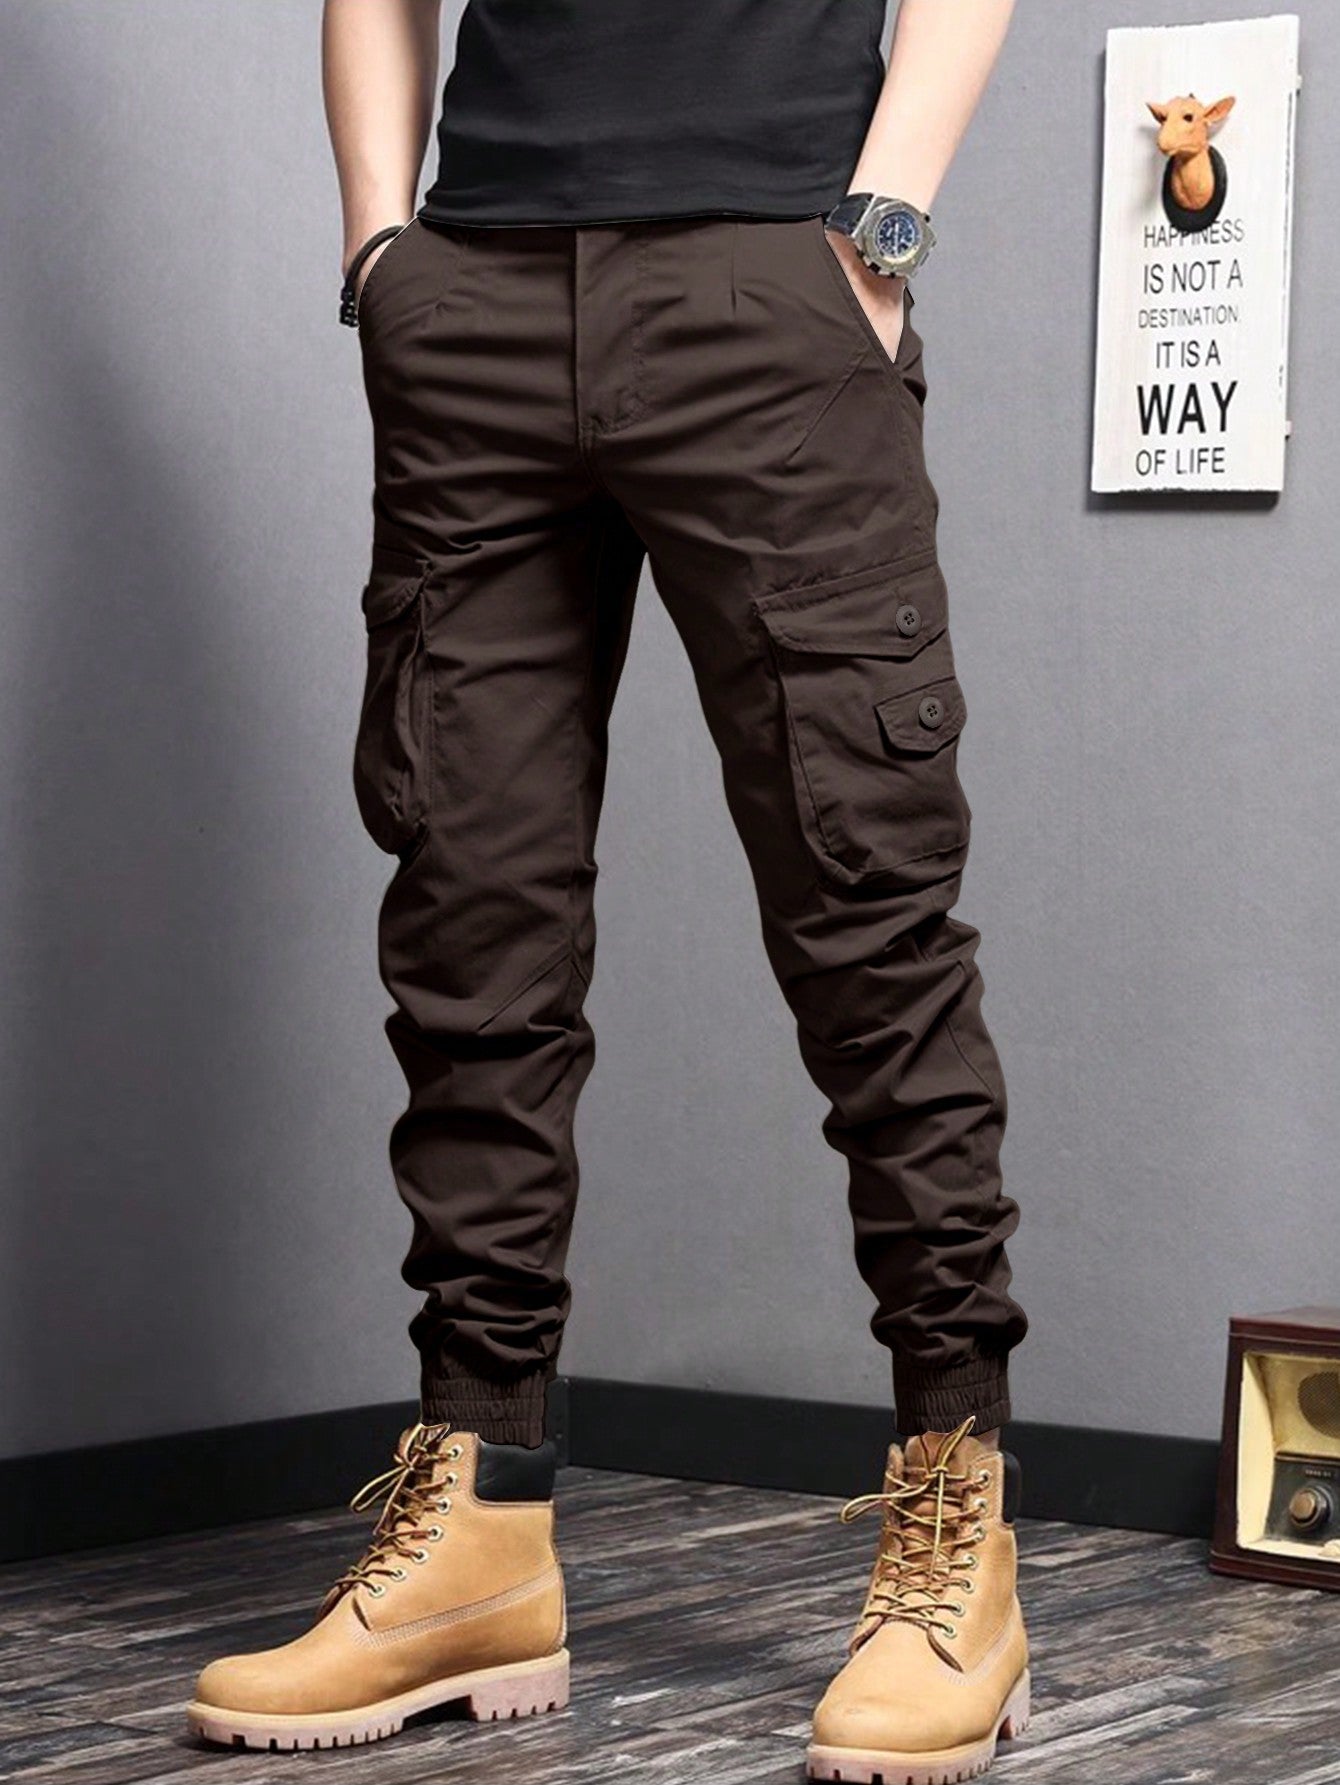 Manfinity EMRG Men's Workwear Tapered Pants